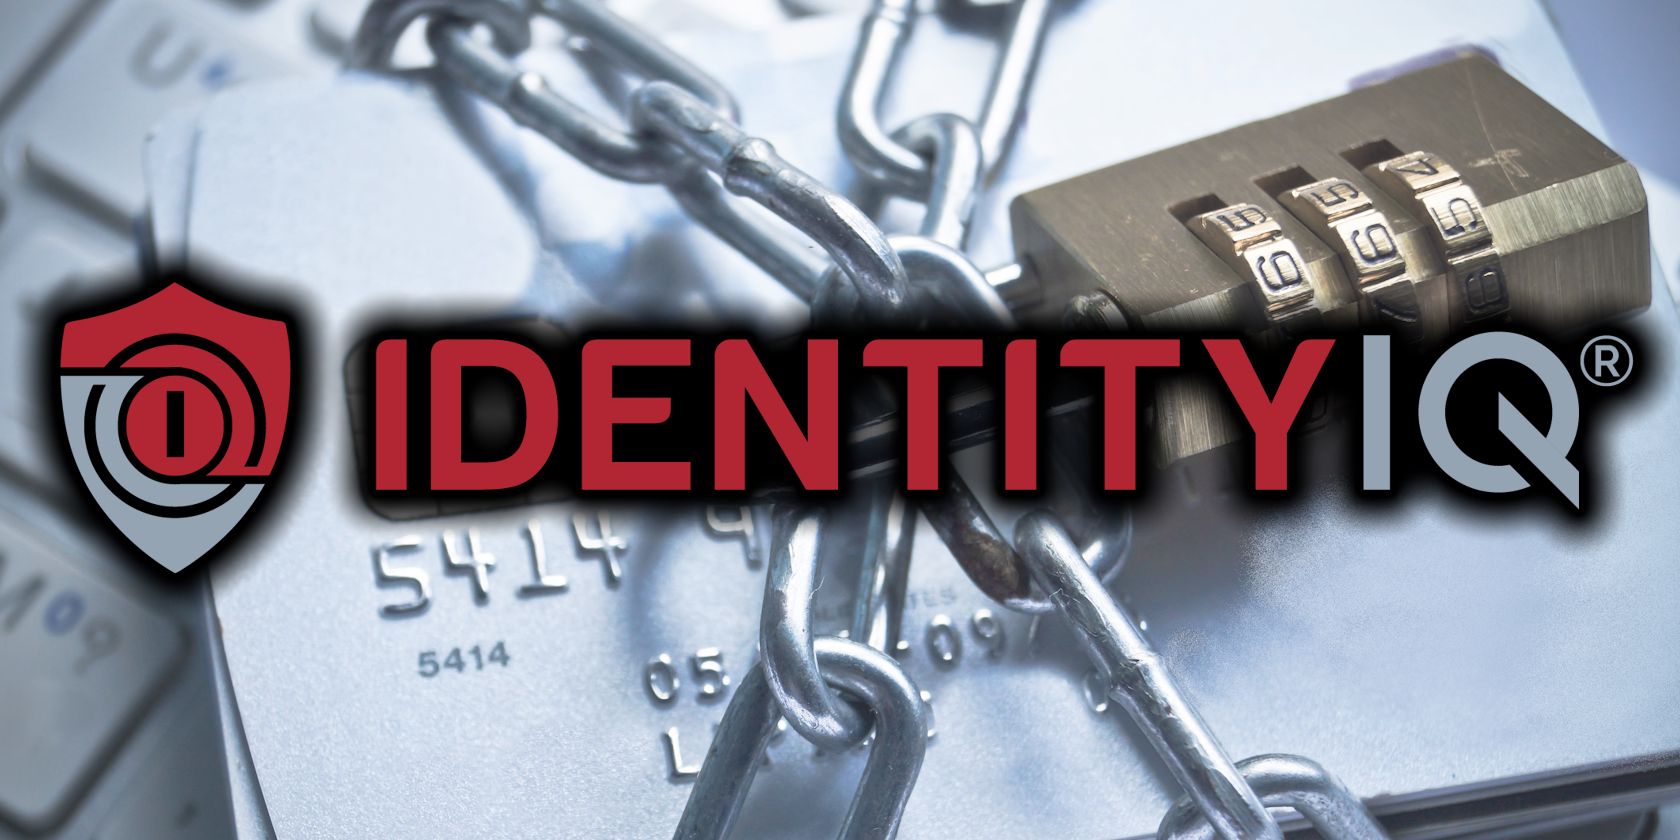 identityiq logo on credit card padlocked together